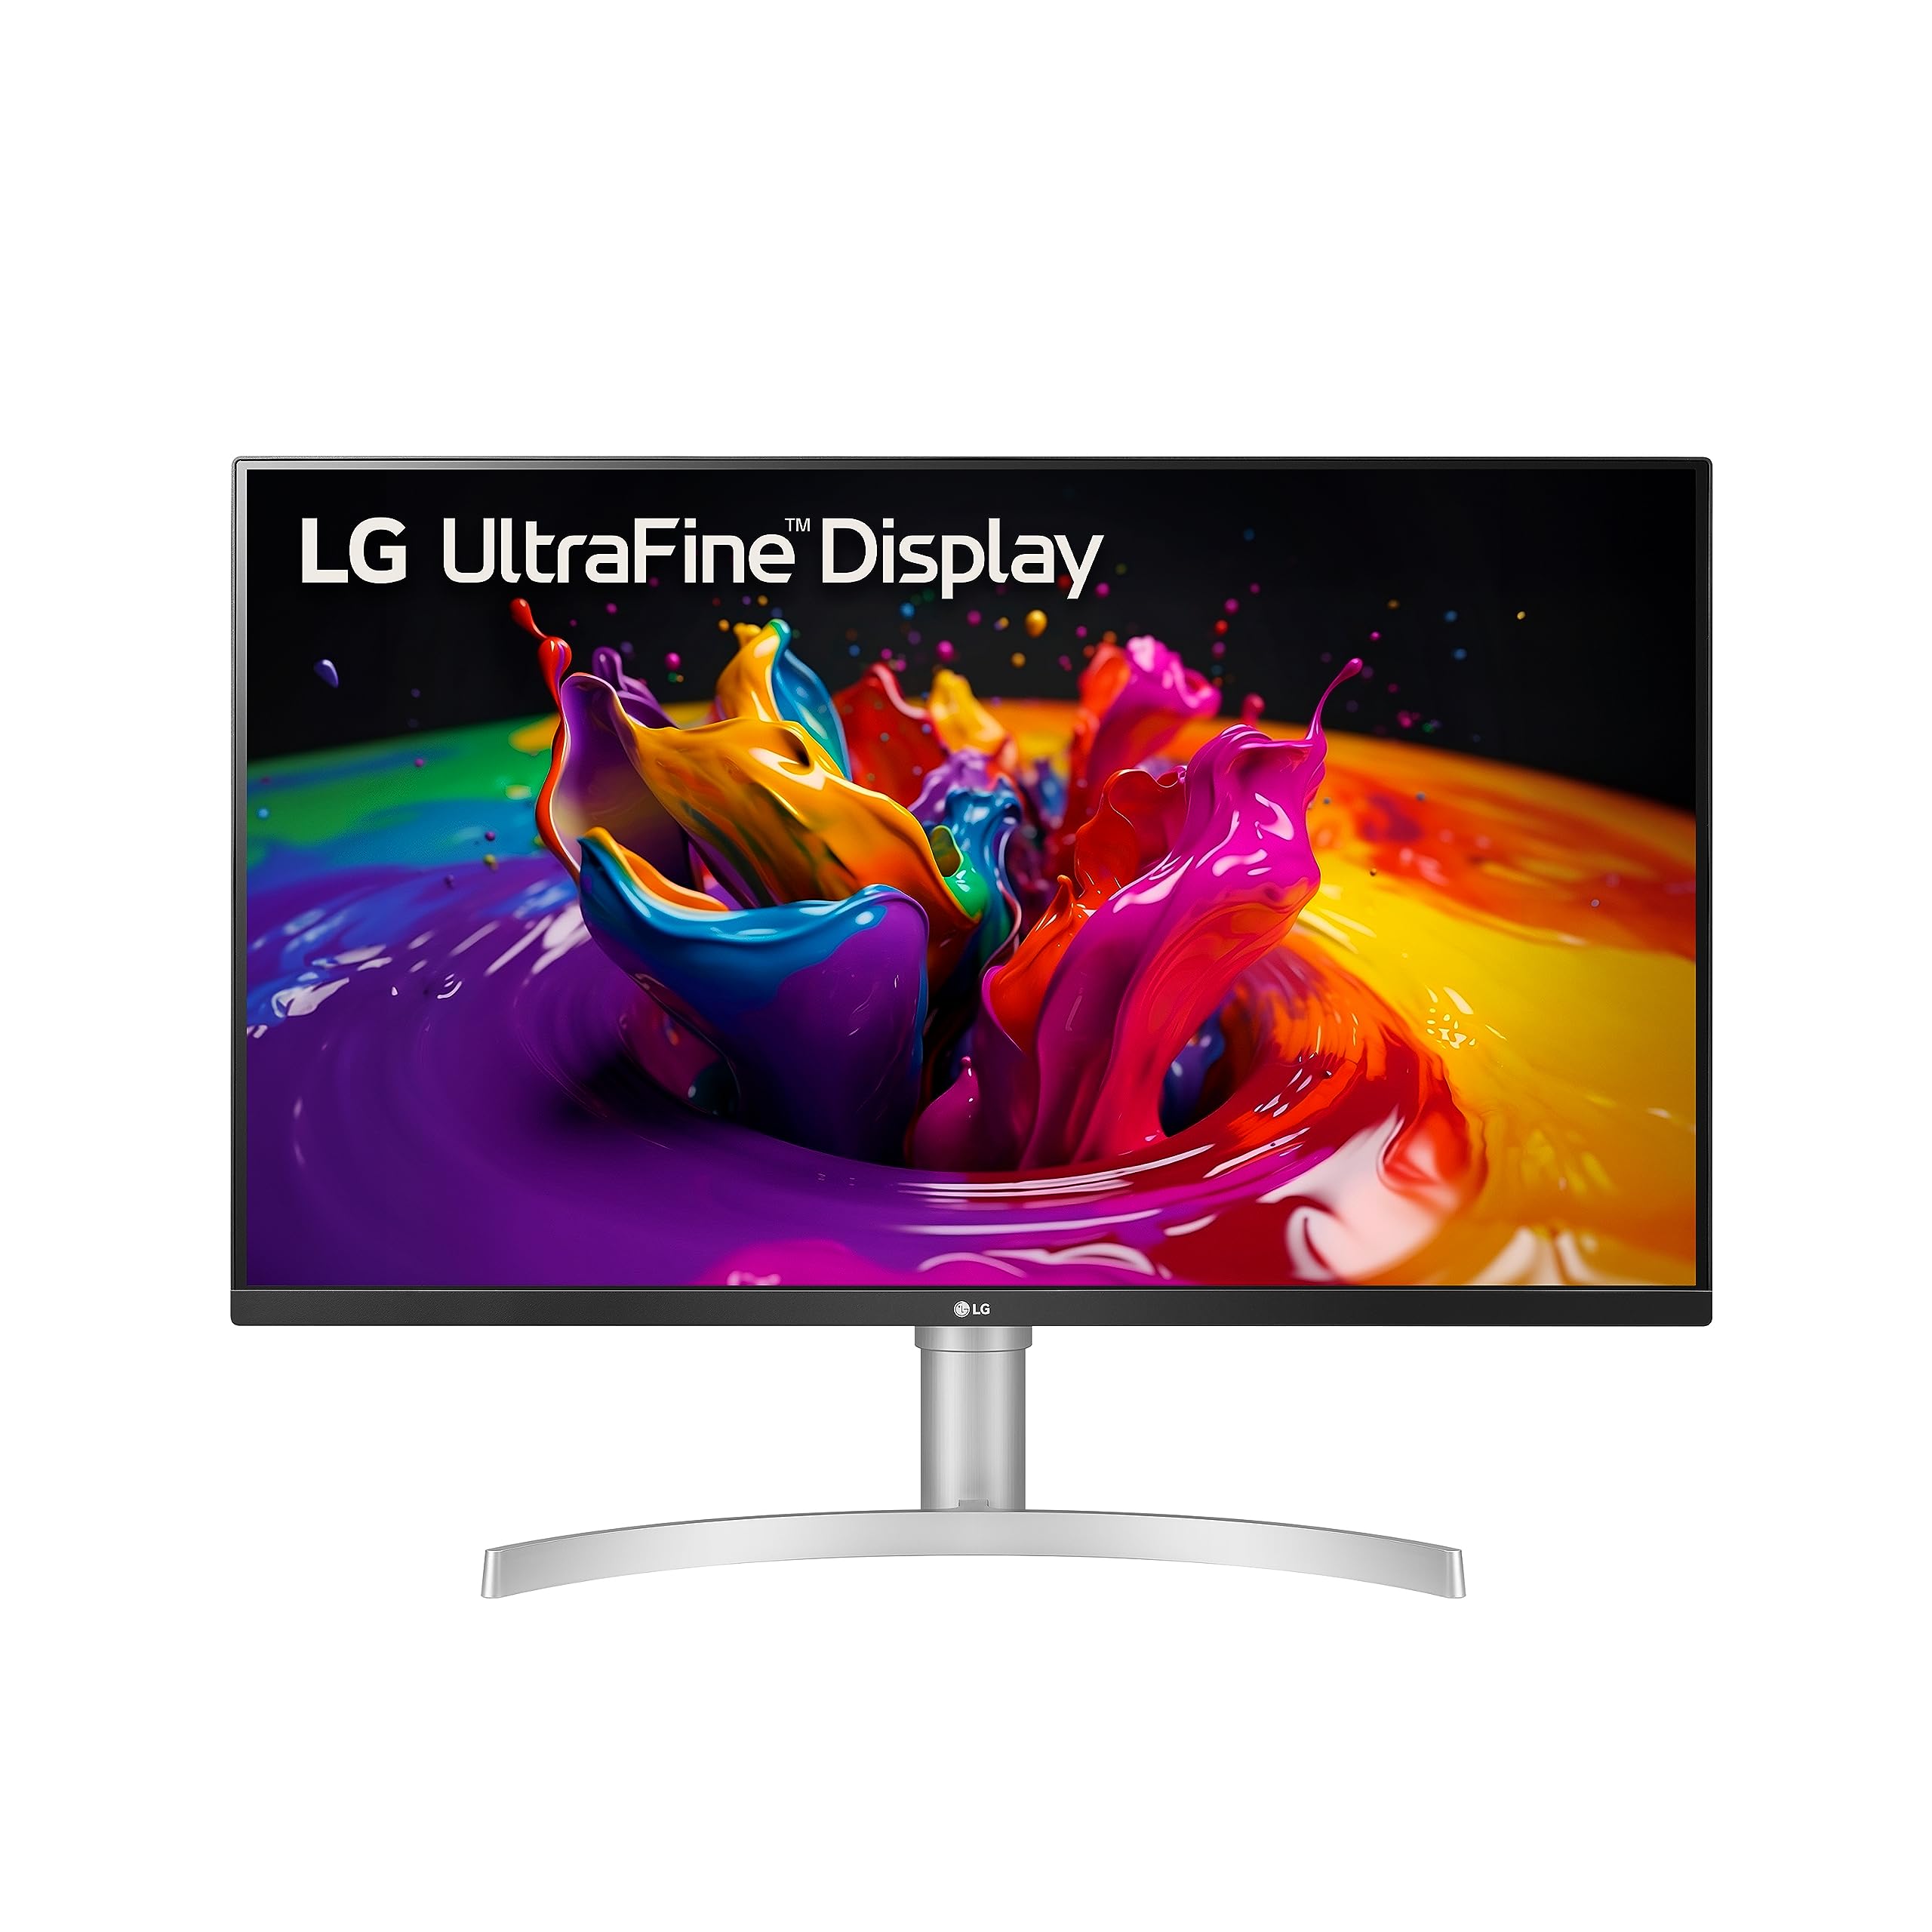 27" LG 4K UHD IPS LED HDR Freesync Monitor $241 + Free Shipping